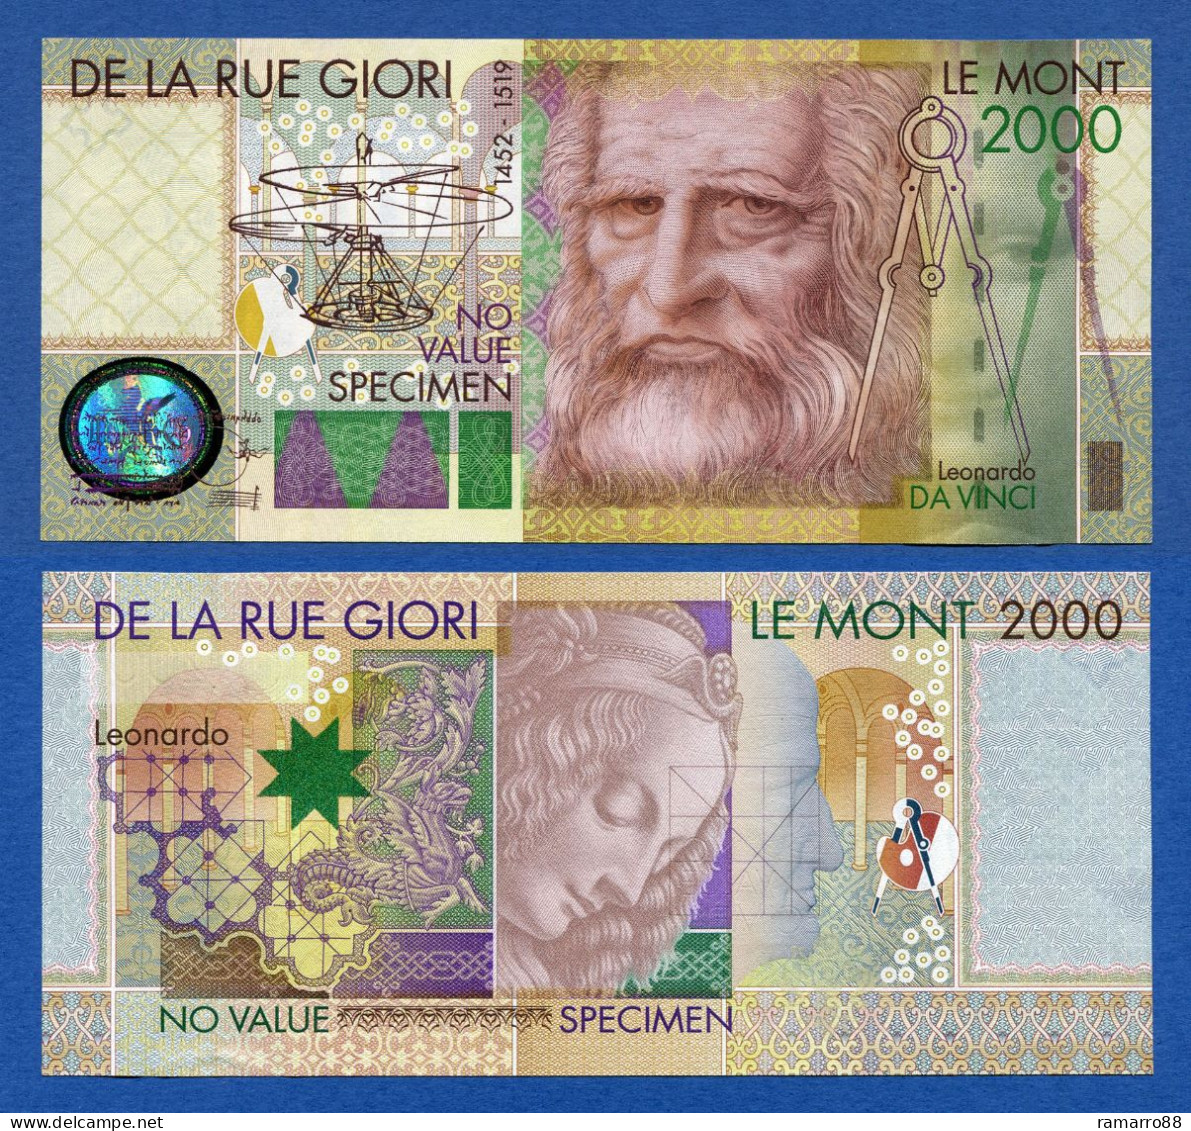 De La Rue Giori - Set of 2 Different Leonardo Da Vinci Without Serial Number Specimen Test Notes Unc